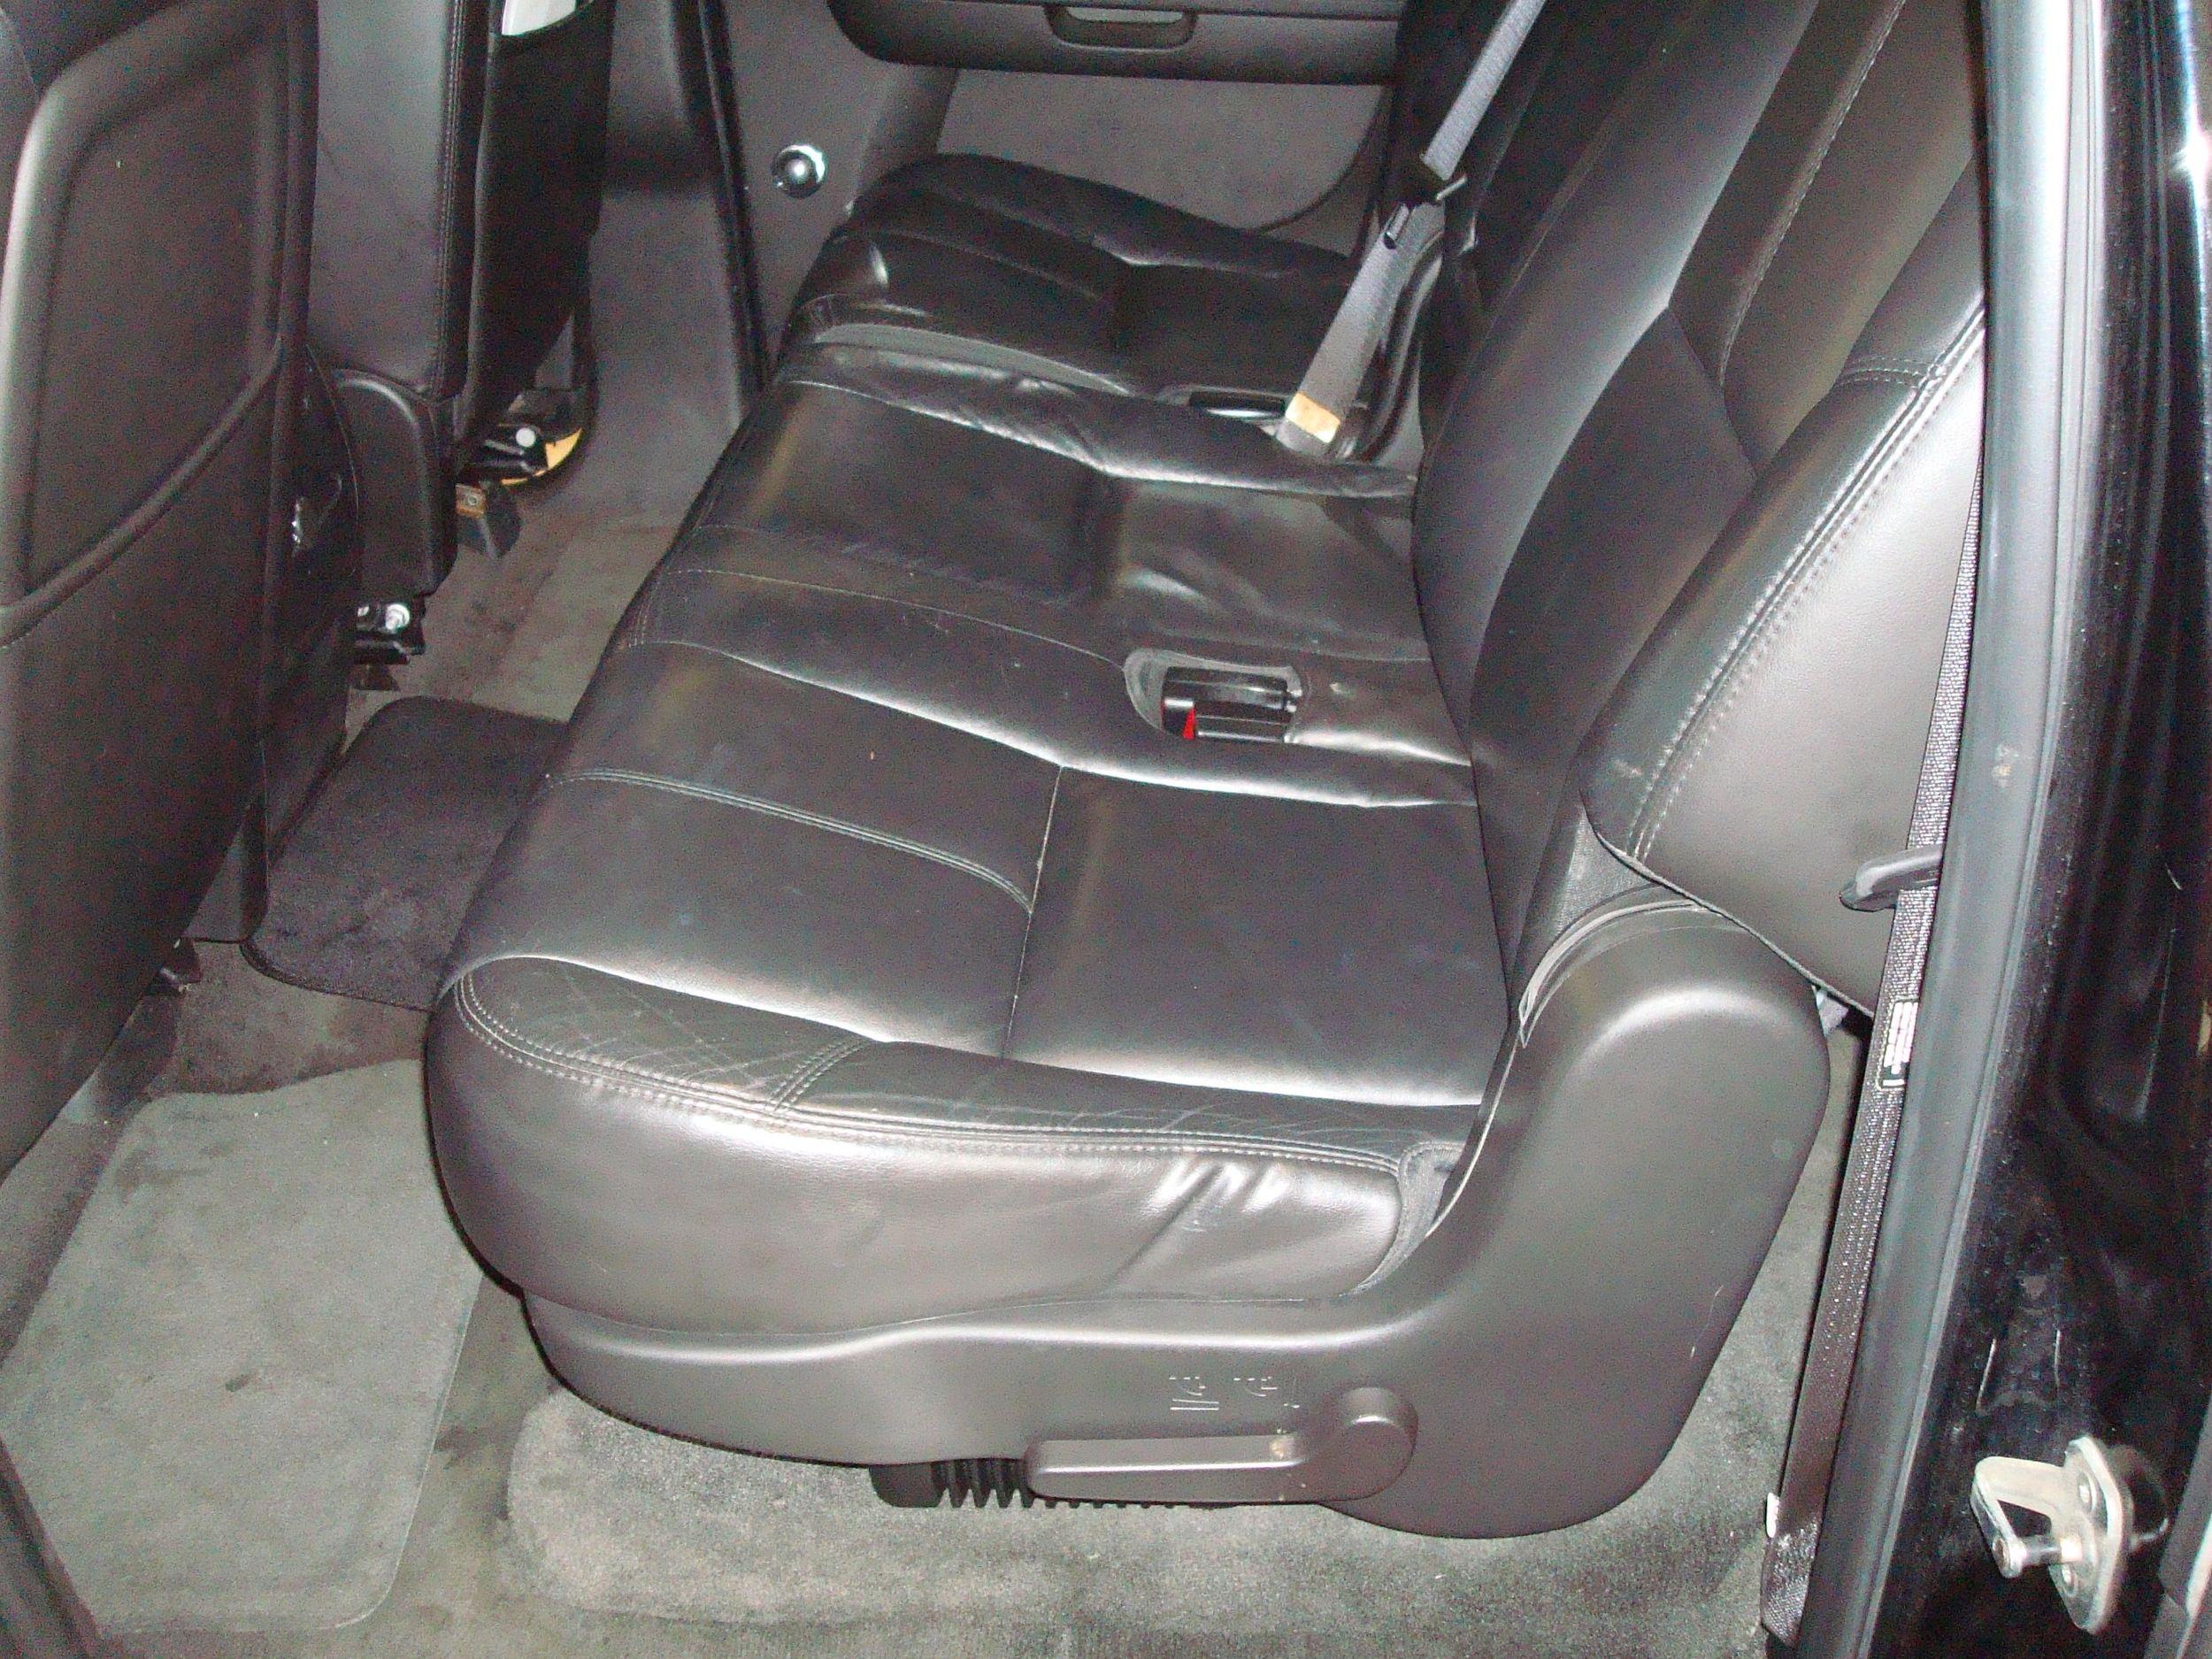 2007 Yukon Denali XL - JL Audio HD Amps completely hidden underneath the 2nd row seat